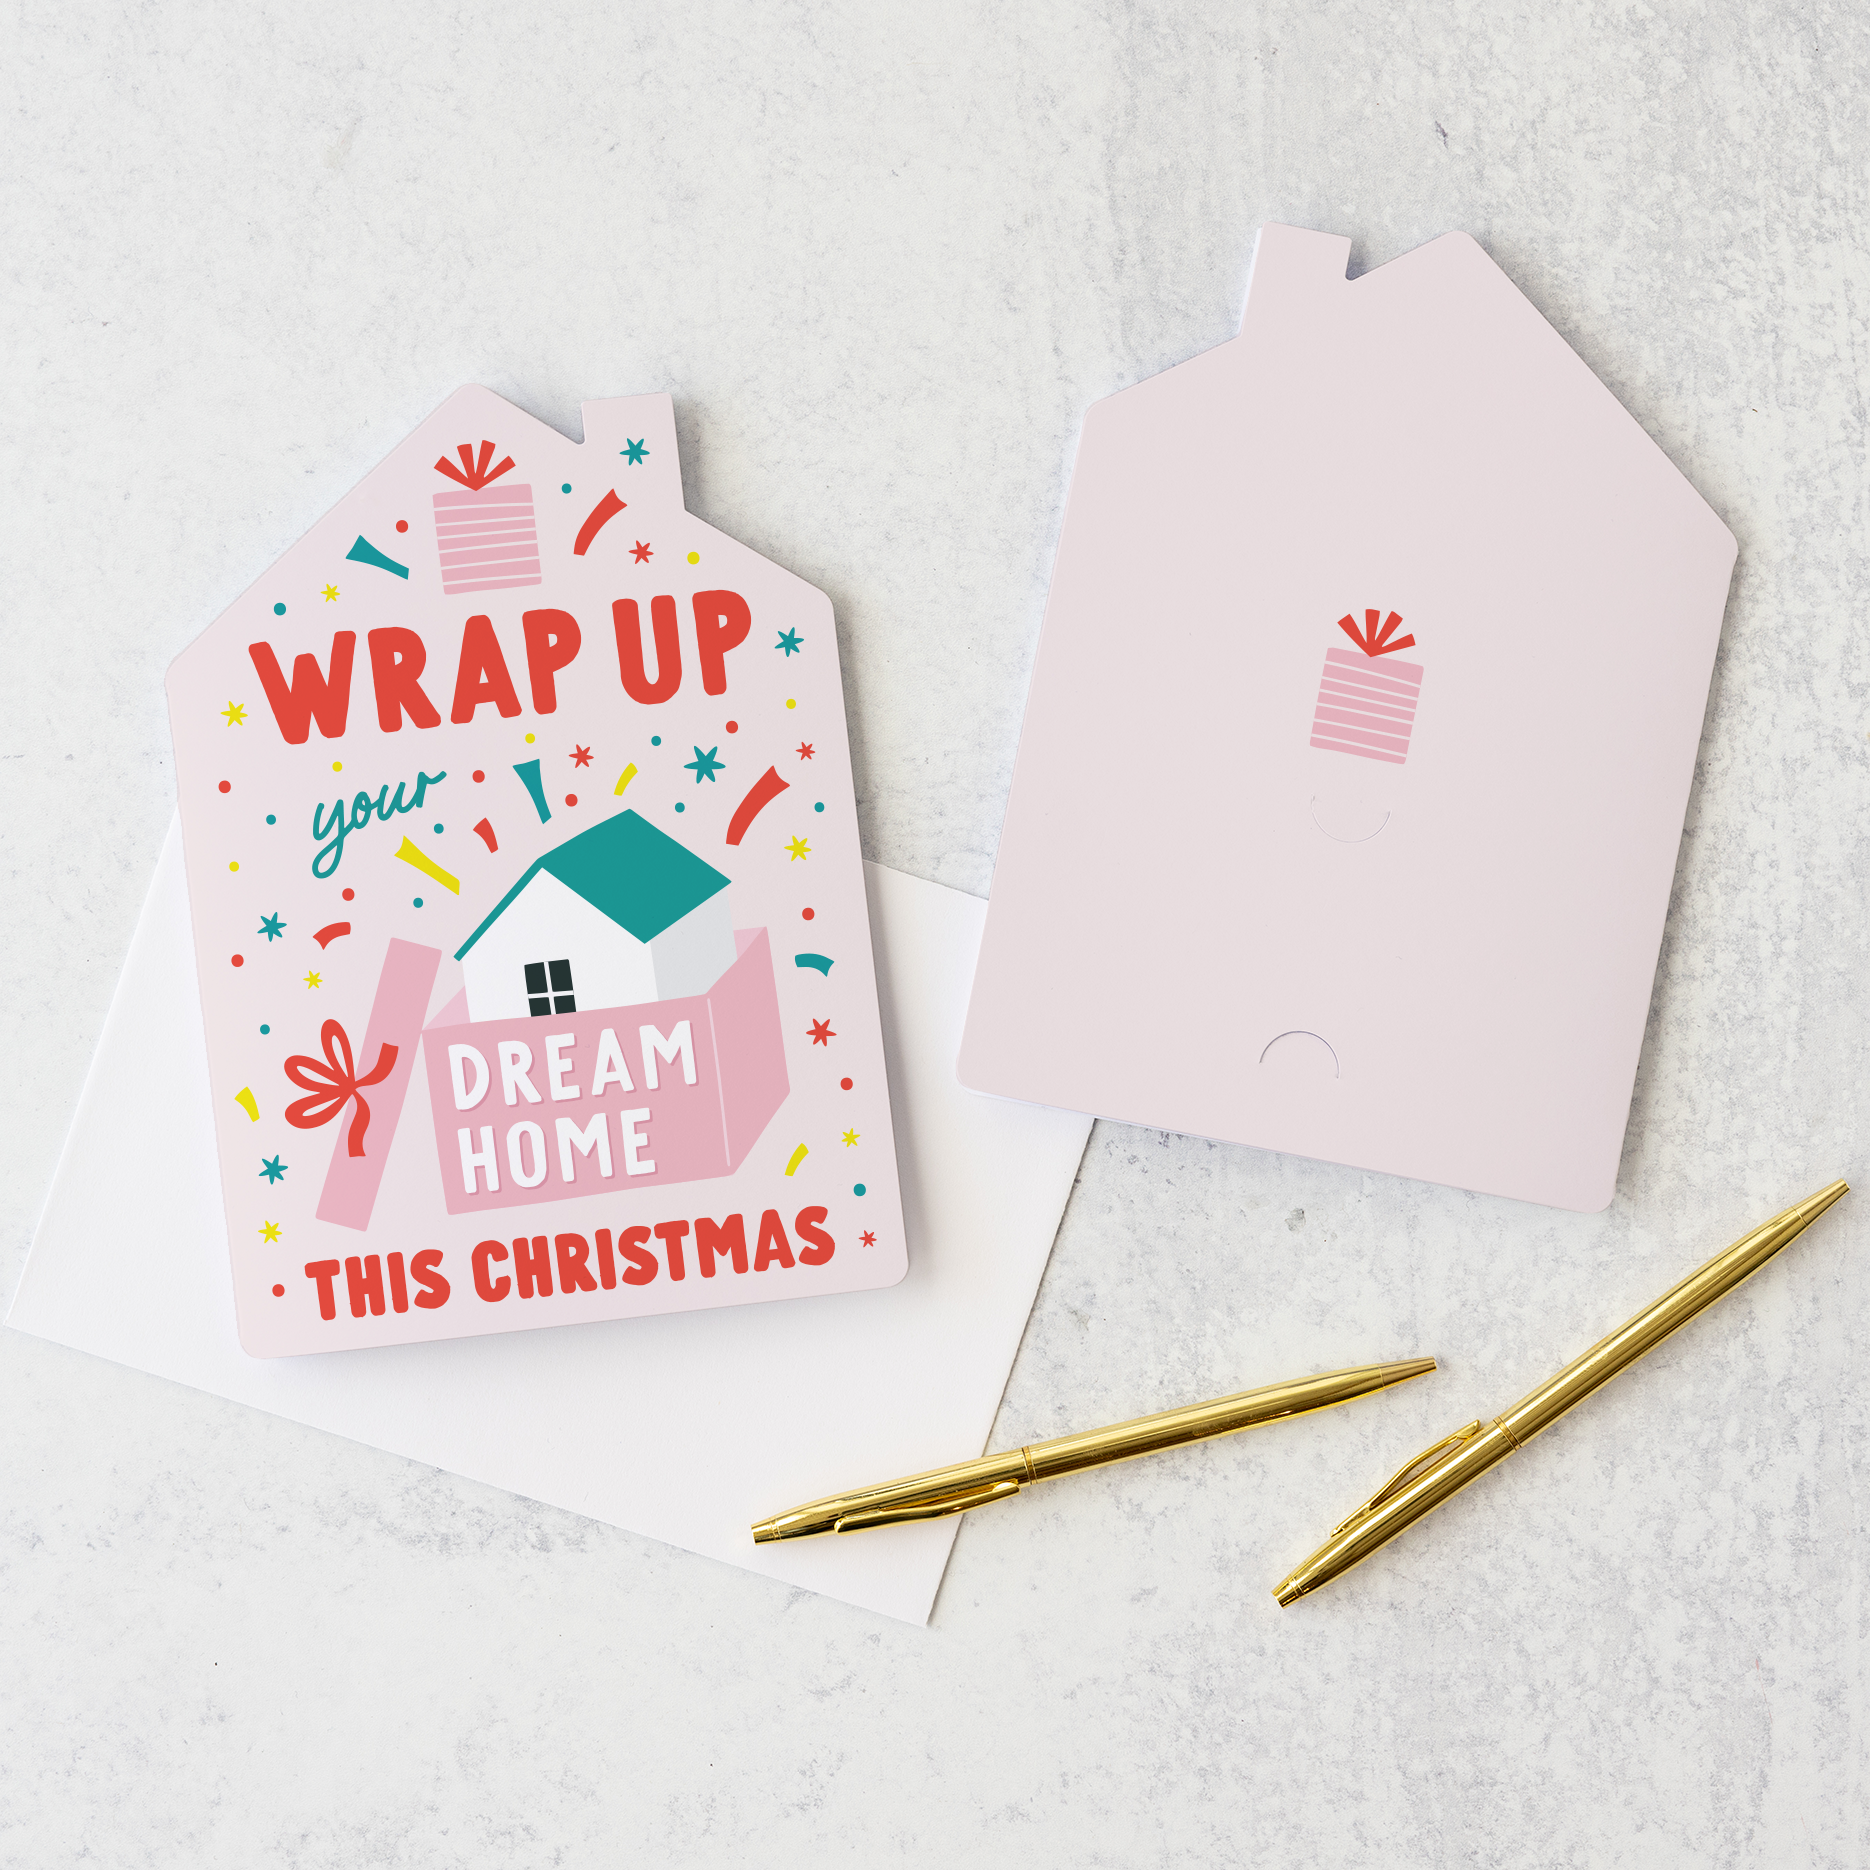 Organize Gift Wrap Supplies: Tips & Tricks